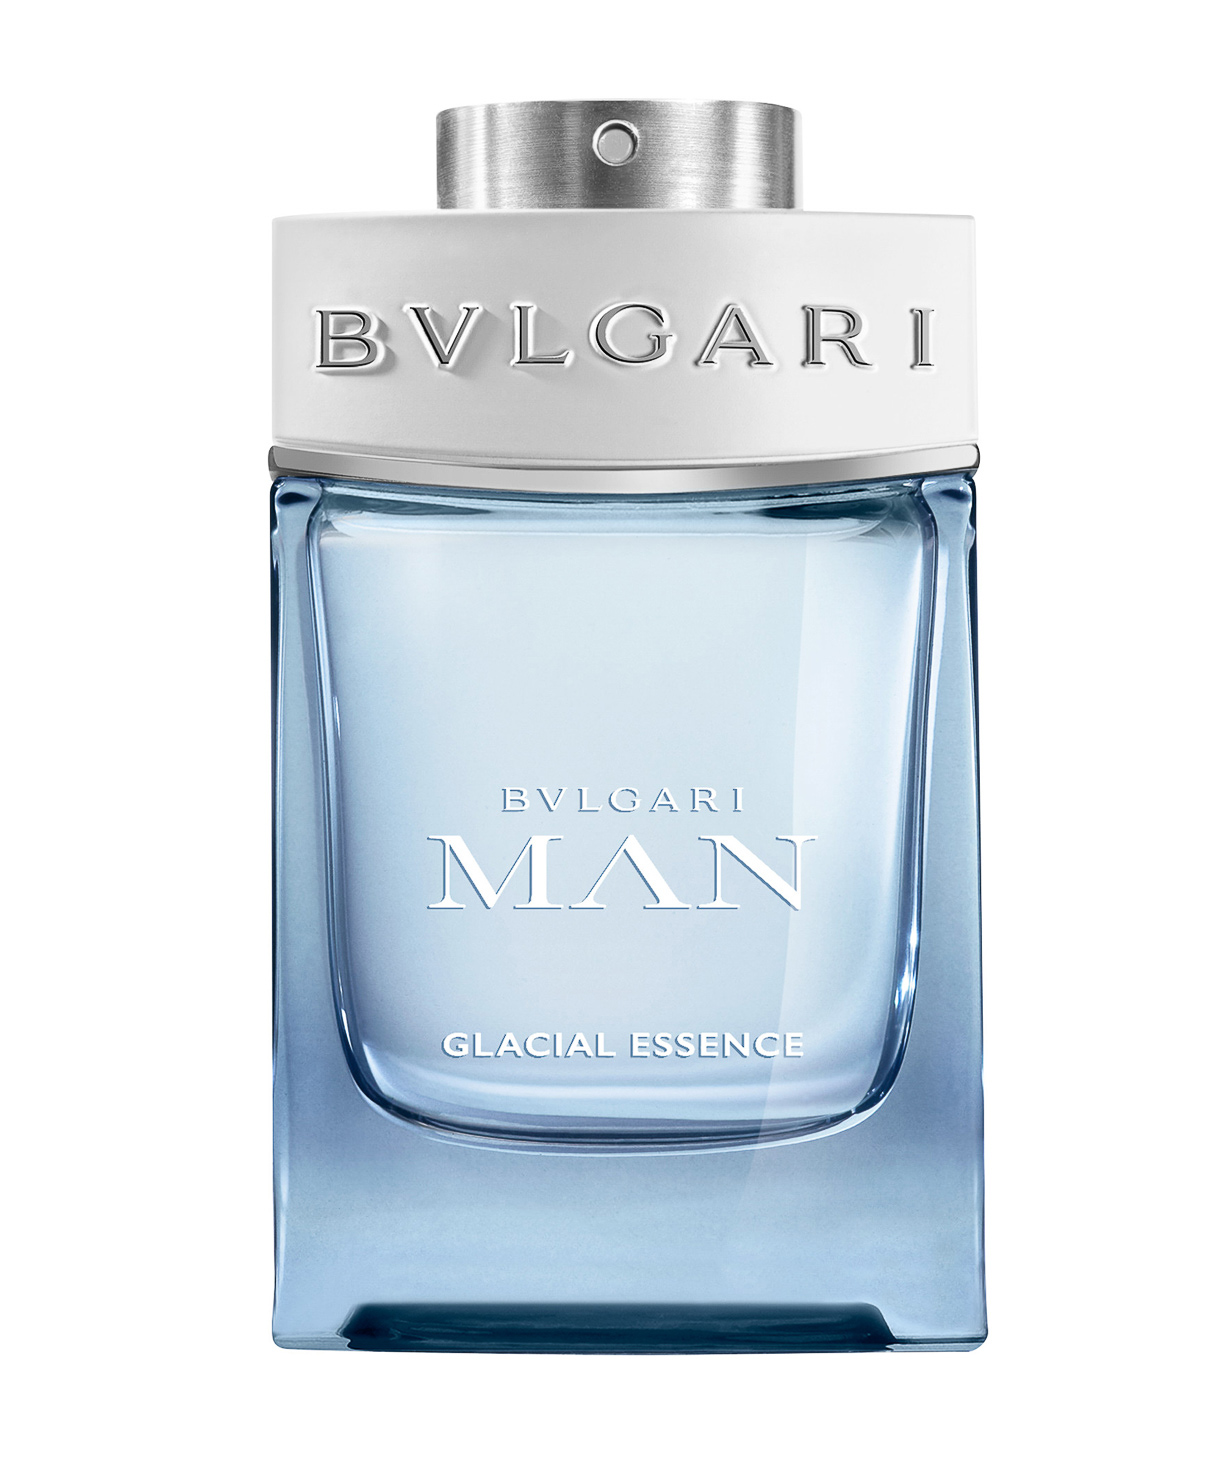 Perfume «Bvlgari» Glacial Essence, for men, 100 ml